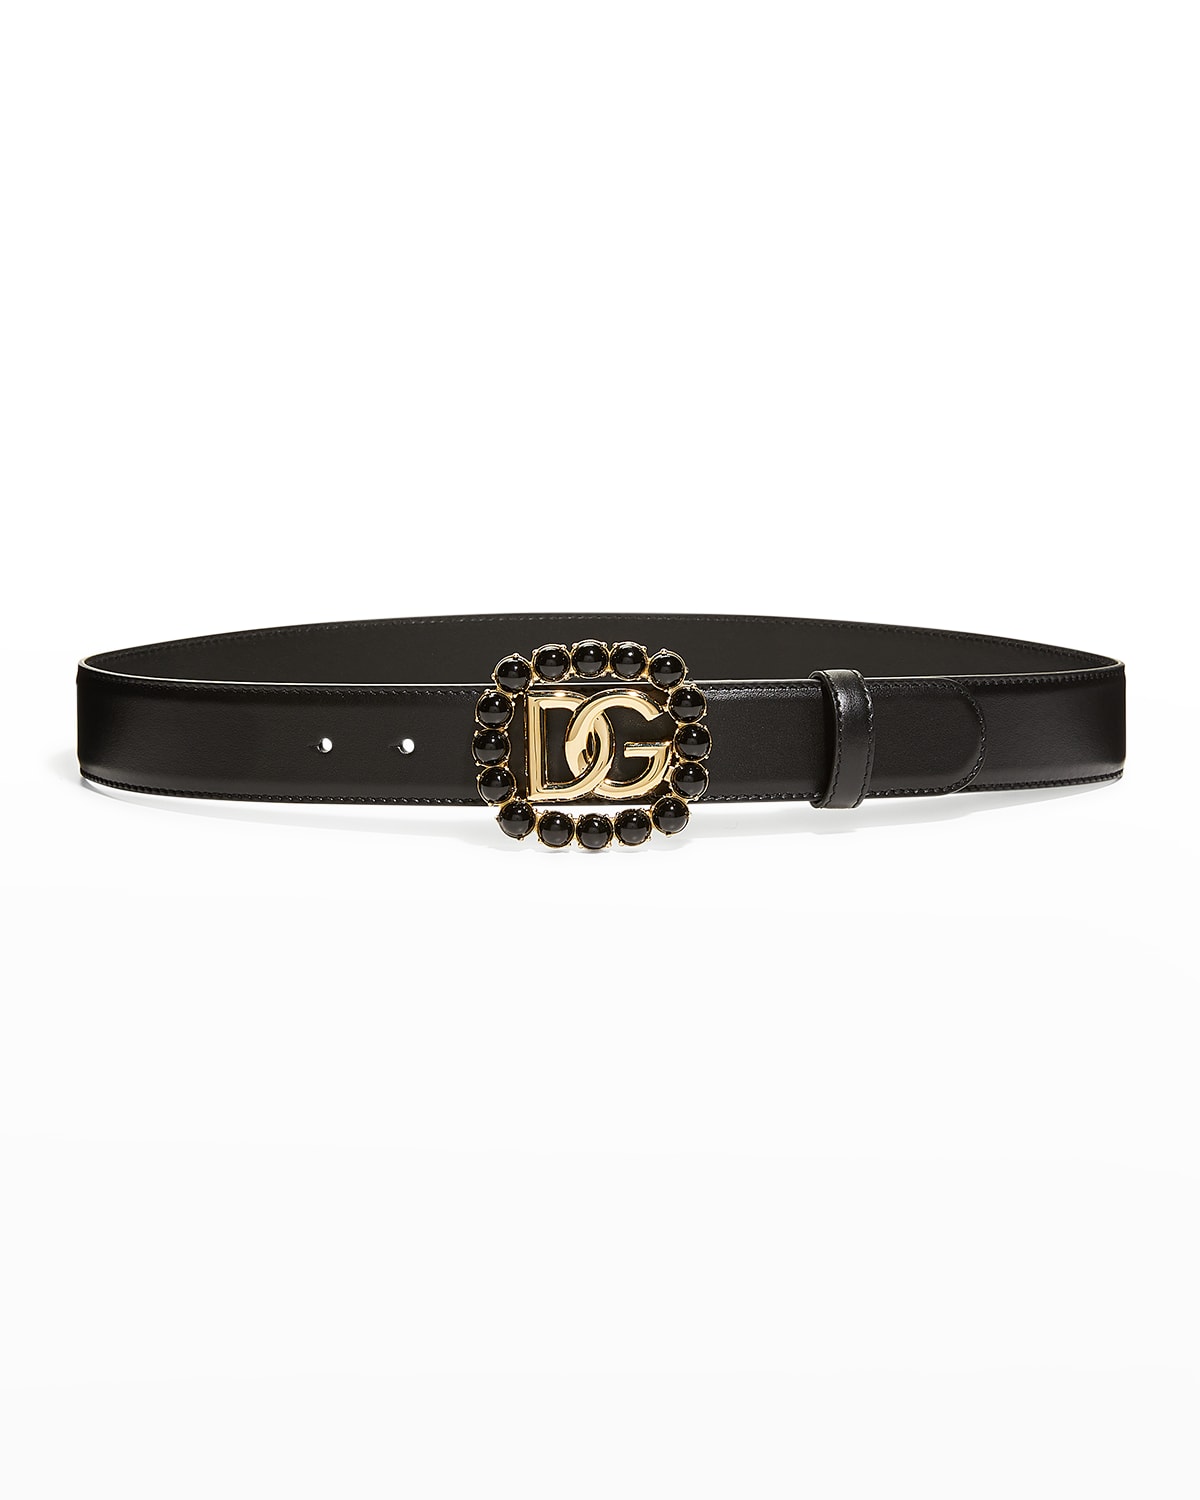 Dolce&Gabbana Interlocking DG Logo Leather Belt | Neiman Marcus